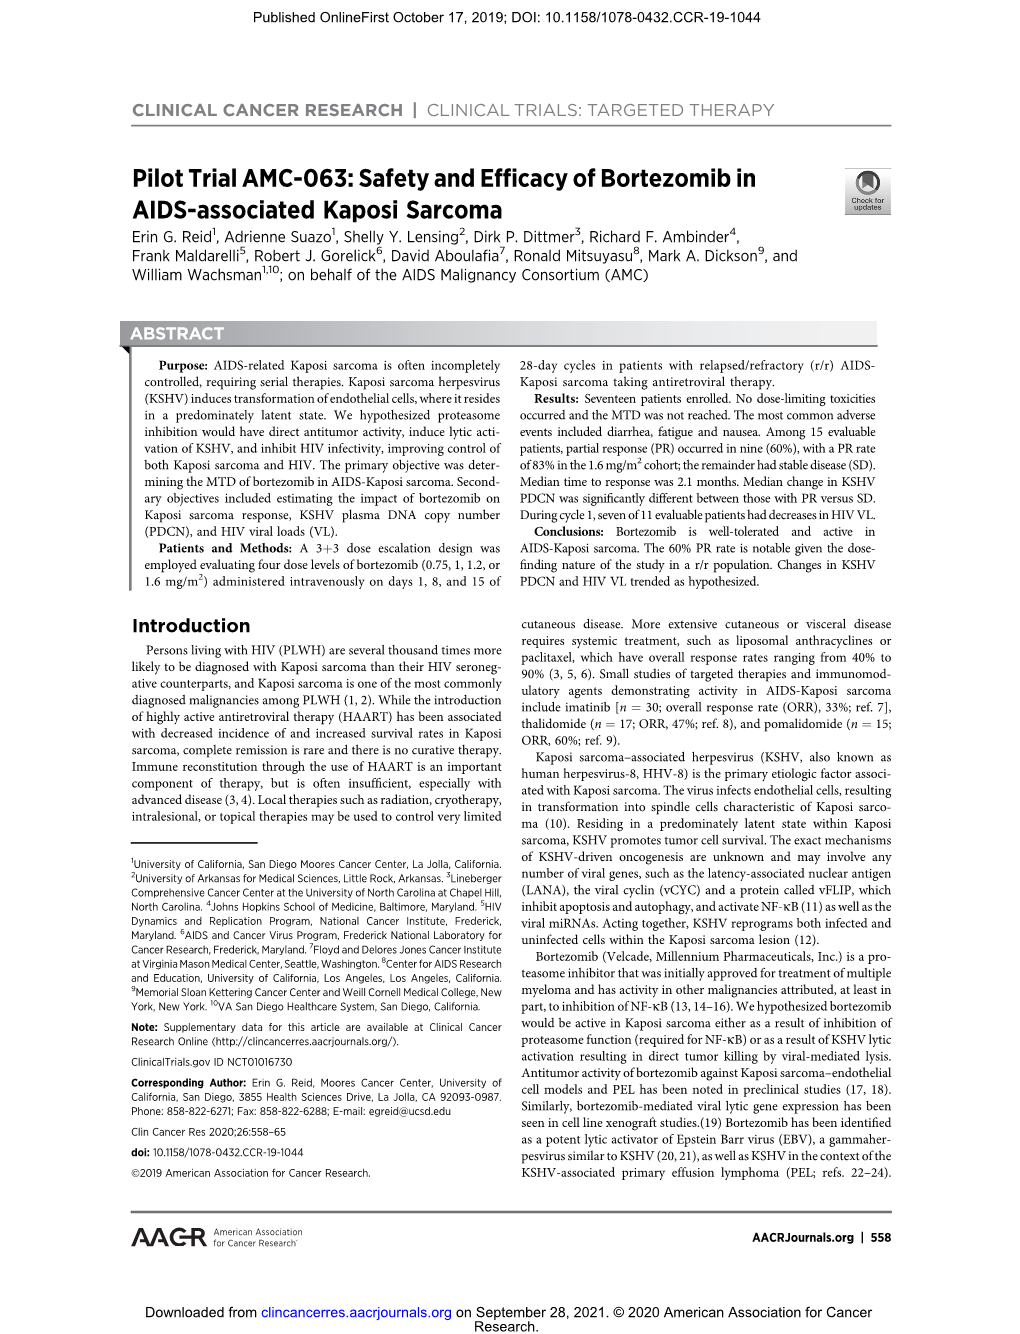 Safety and Efficacy of Bortezomib in AIDS-Associated Kaposi Sarcoma